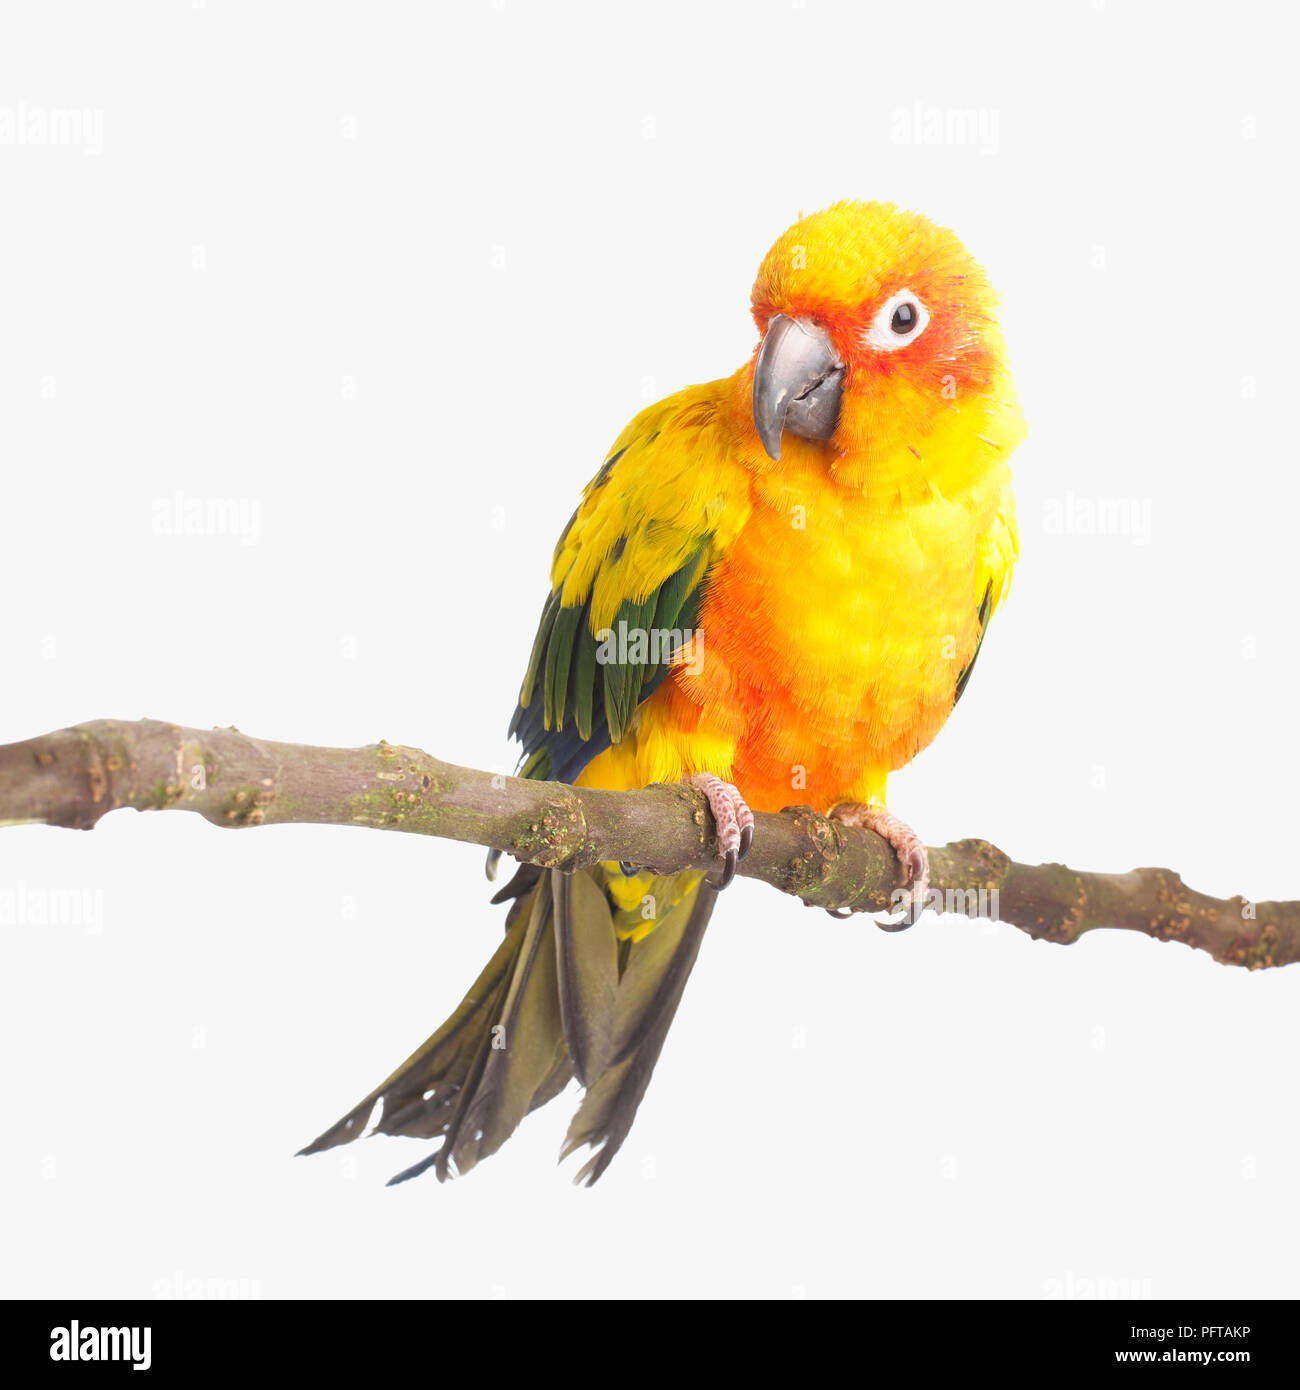 Farbenfrohe gelbe und rote Papagei, Sittiche, Sittich (Aratinga solstitialis) Stockfoto